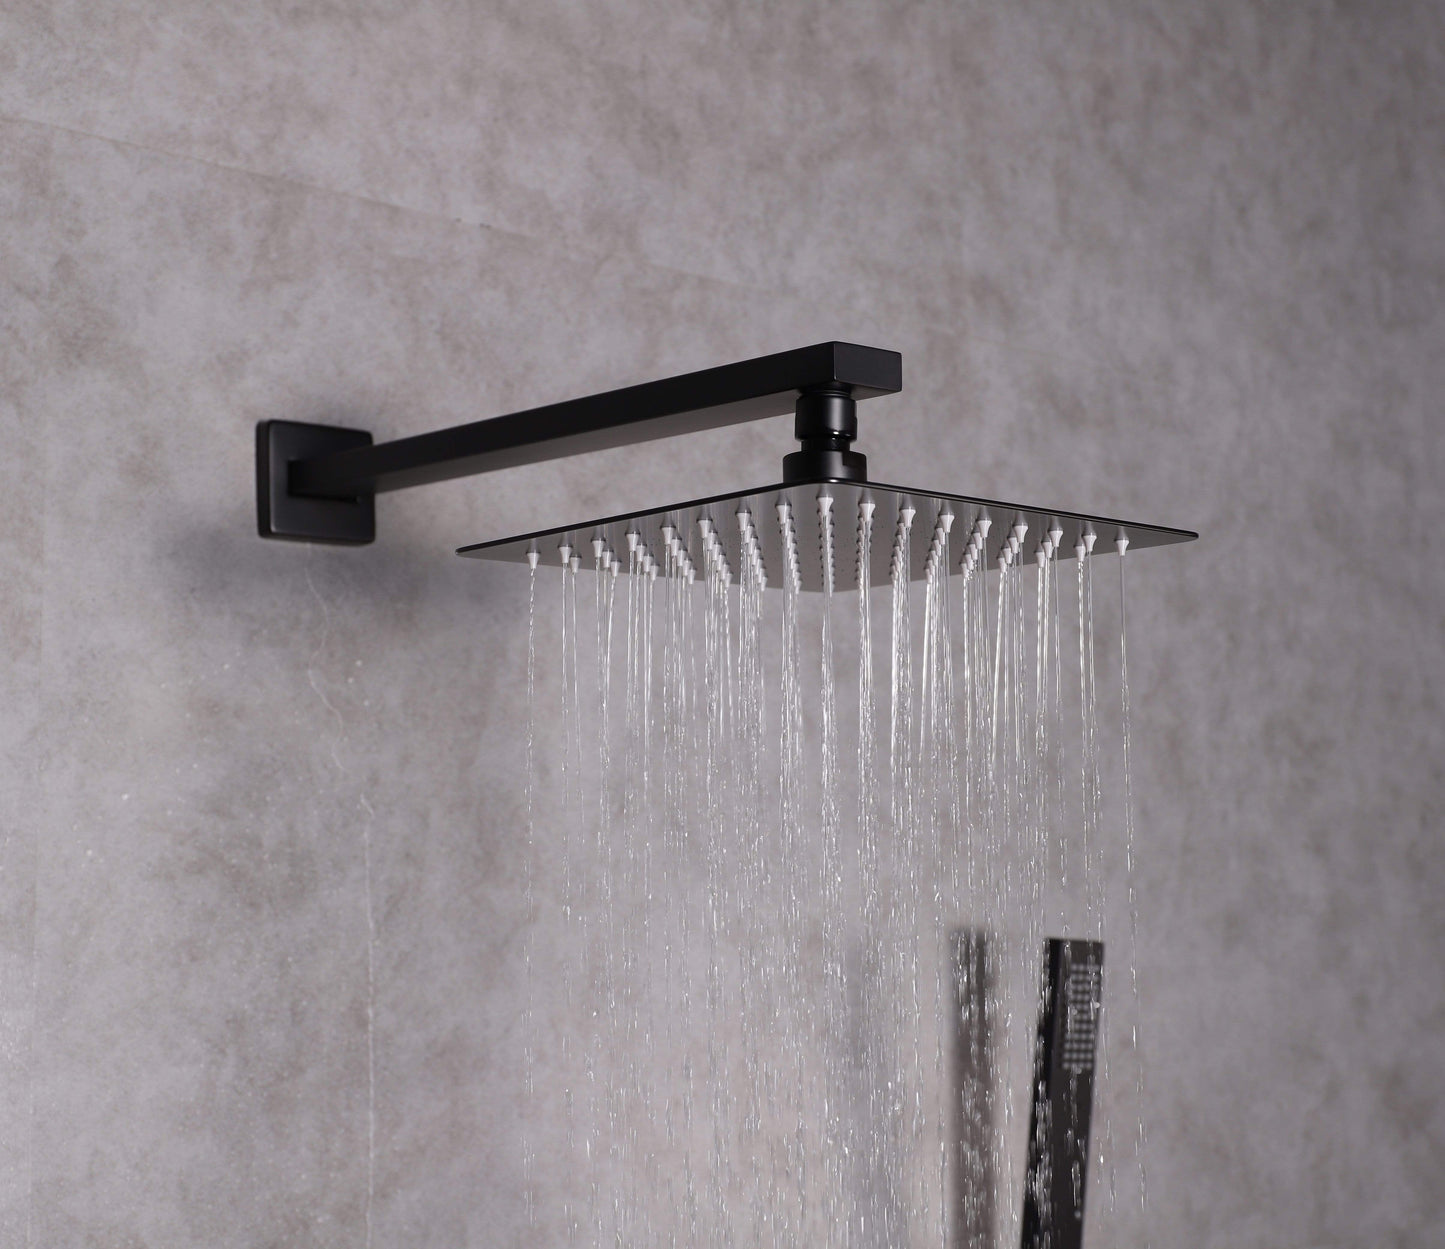 Lexora Shower Monte Celo Stainless Steel Square Shower Set